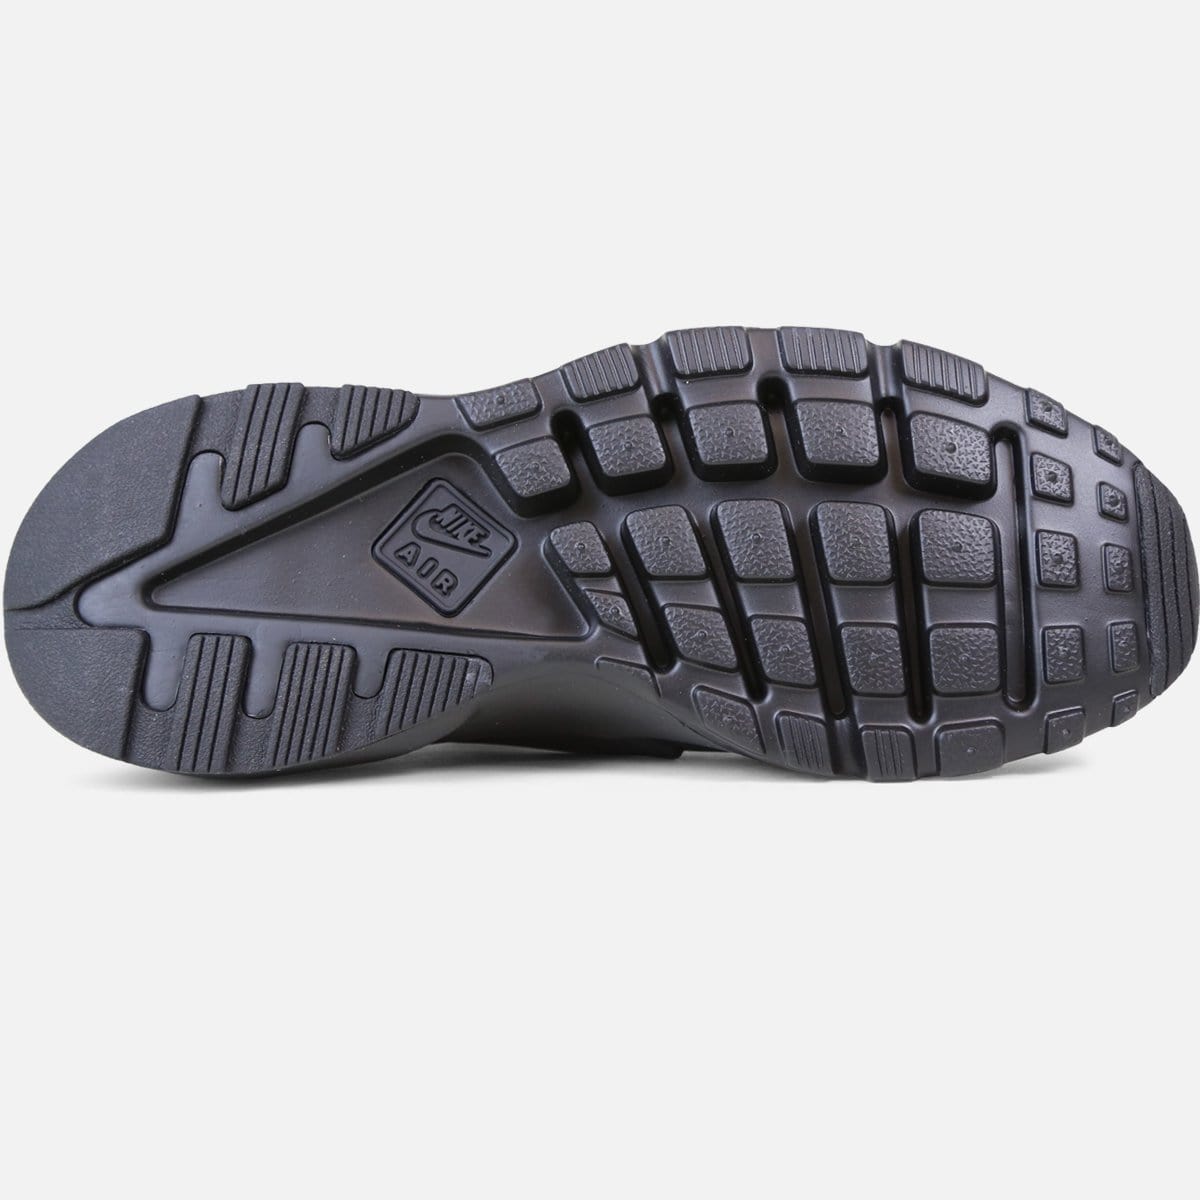 Nike Air Huarache Ultra Black/Mint Under Retail — Sneaker Shouts